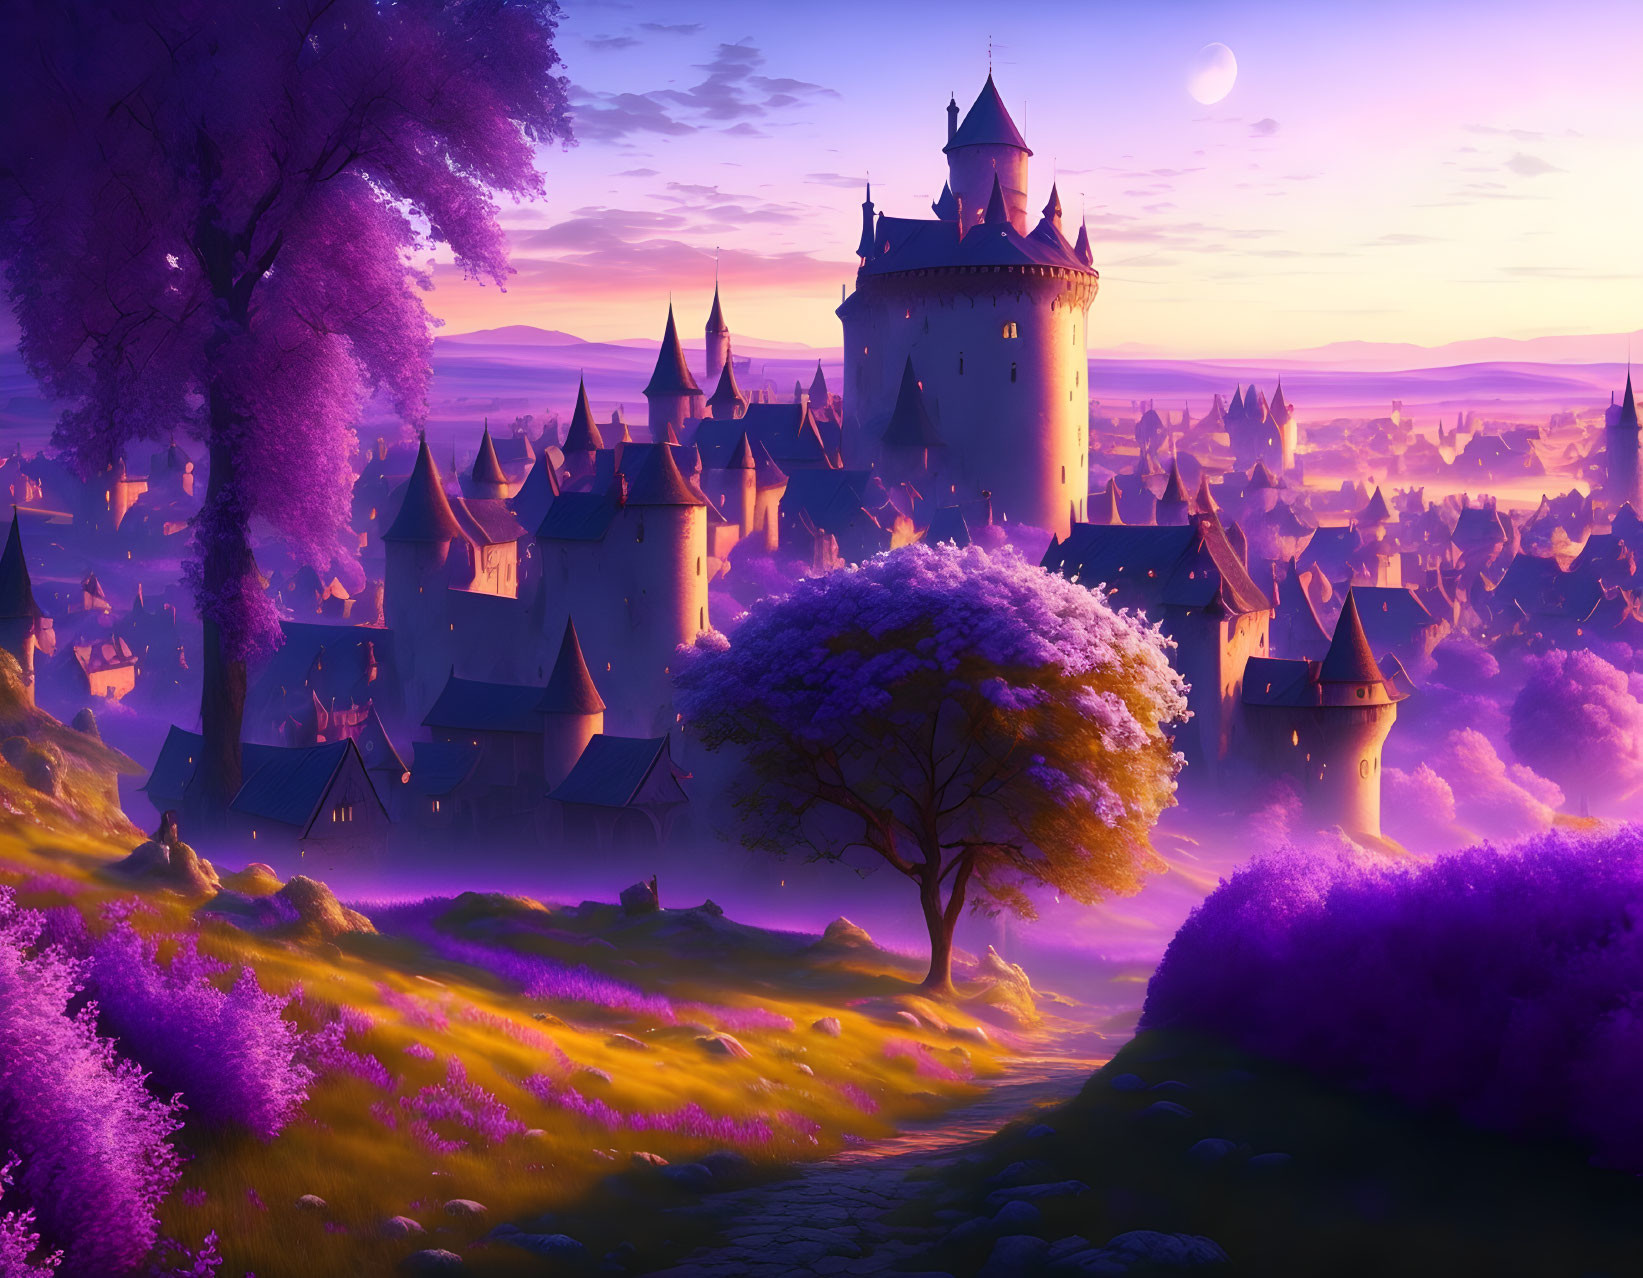 Fantasy landscape: grand castle, purple trees, crescent moon at dusk